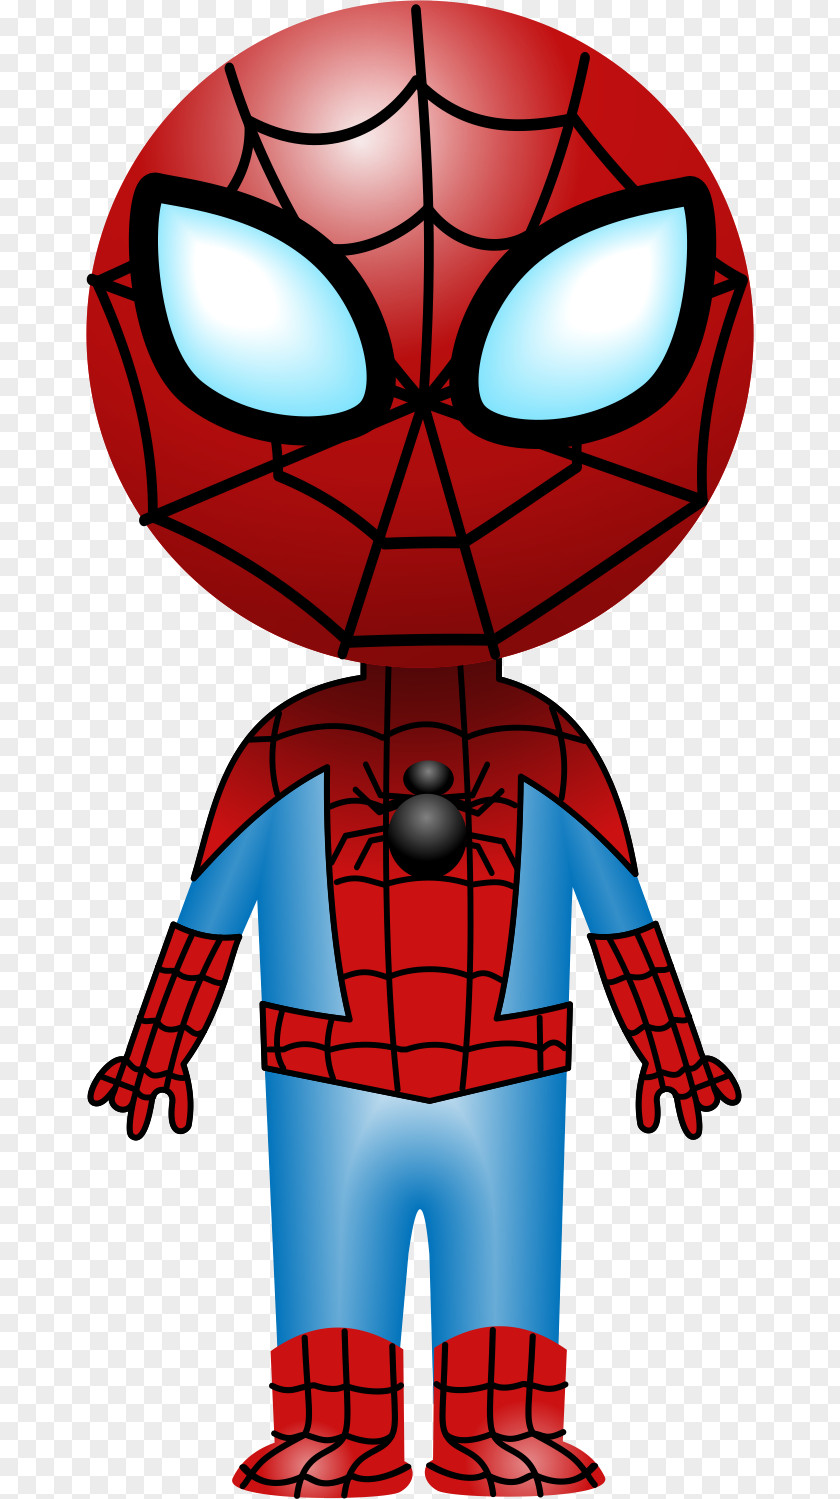 Spiderman Spider-Man Superhero Image PNG